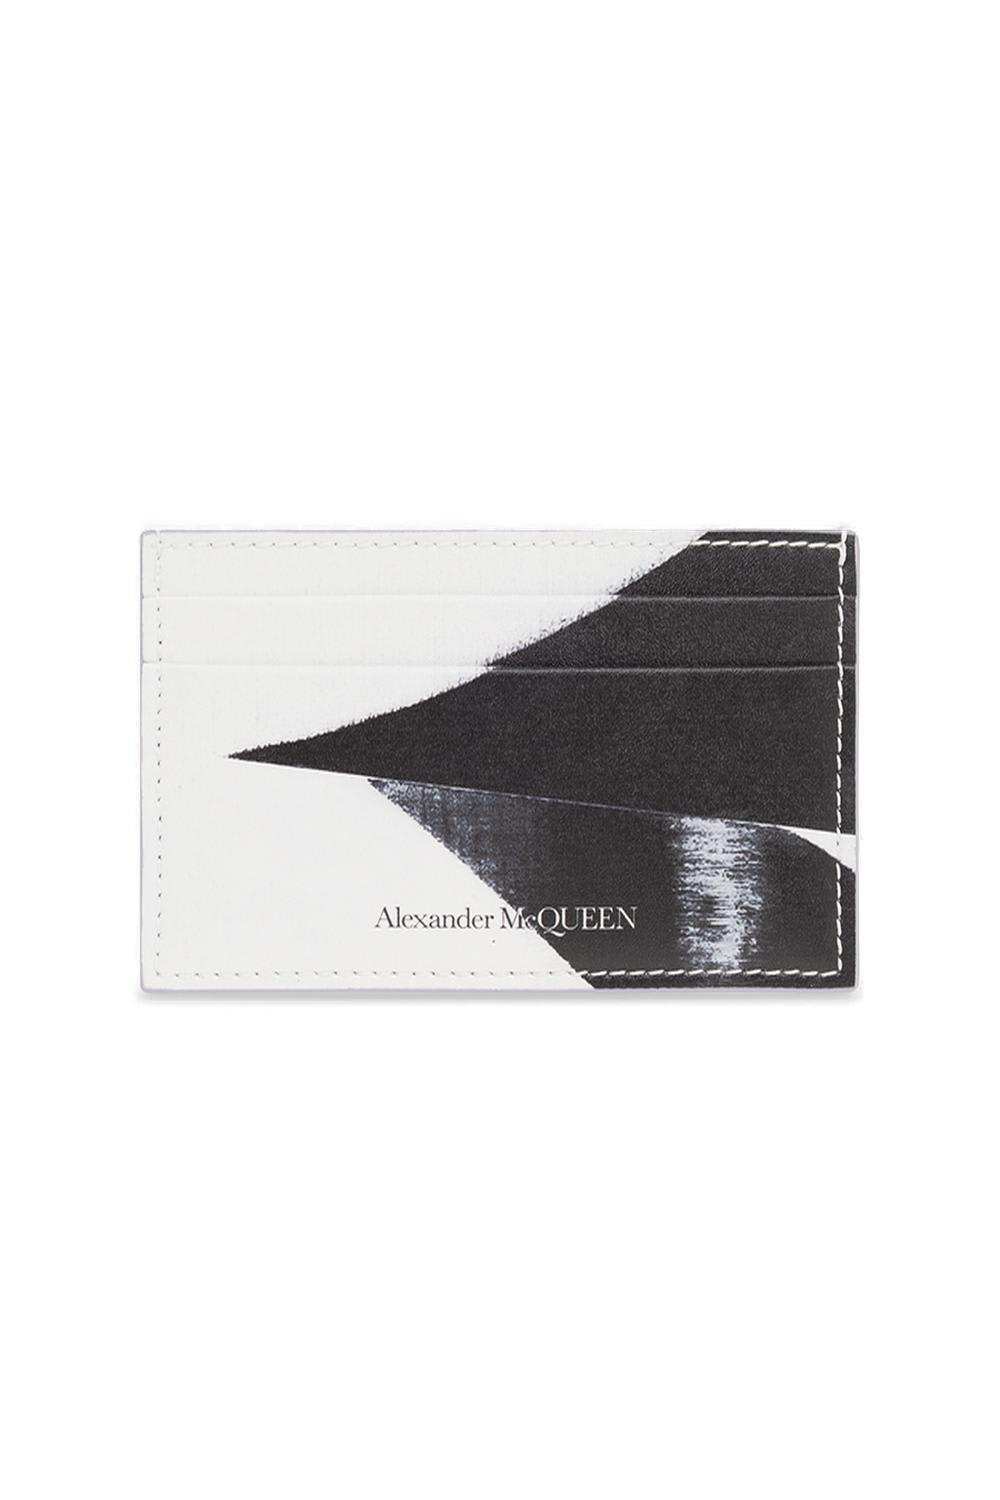 Alexander McQueen Painterly Printed Card Holder